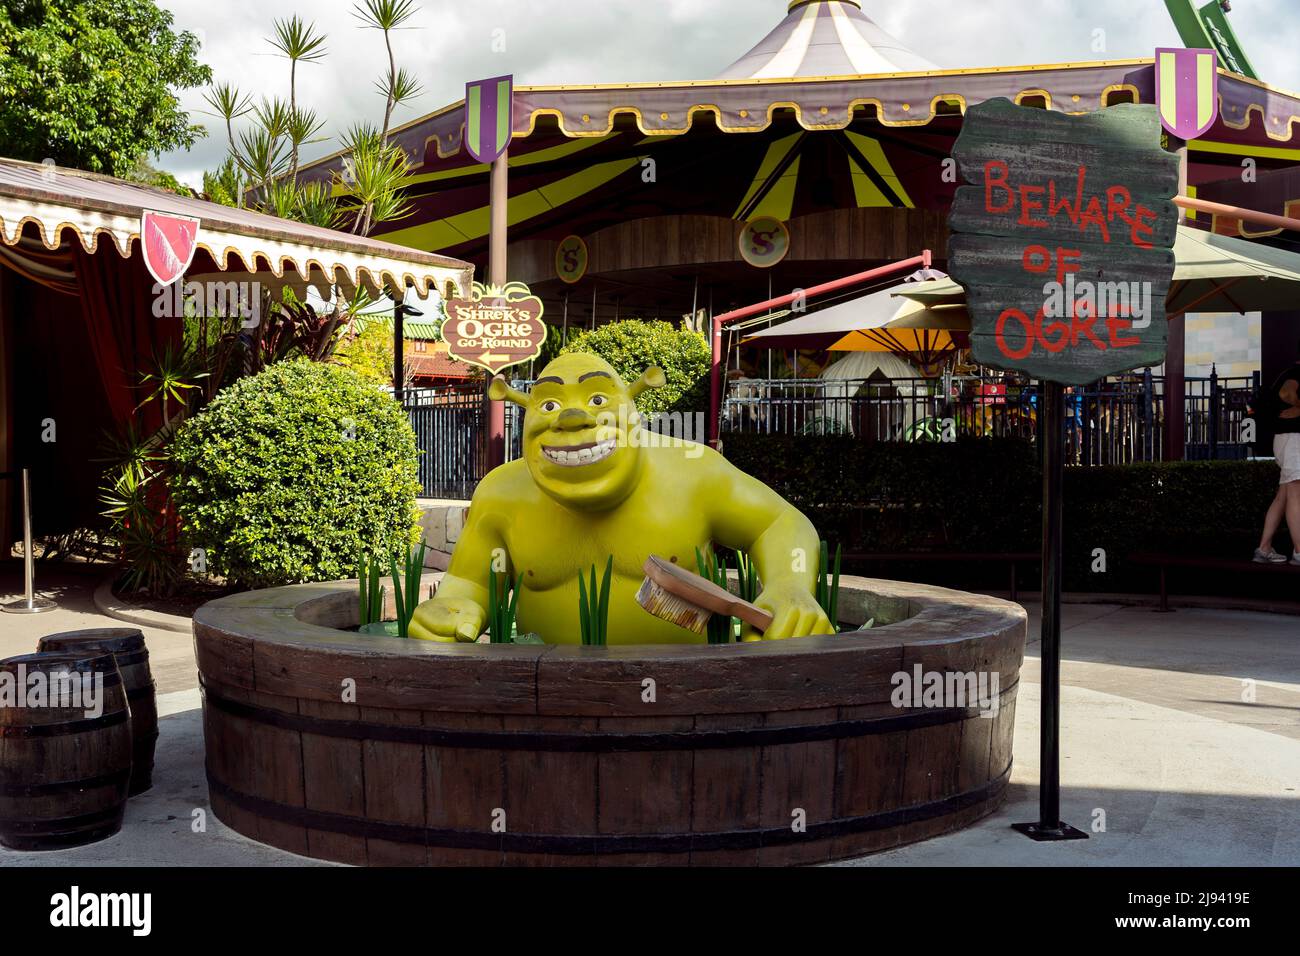 Gold Coast, Queensland, Australia - Shrek ride at Dreamworld theme park Stock Photo